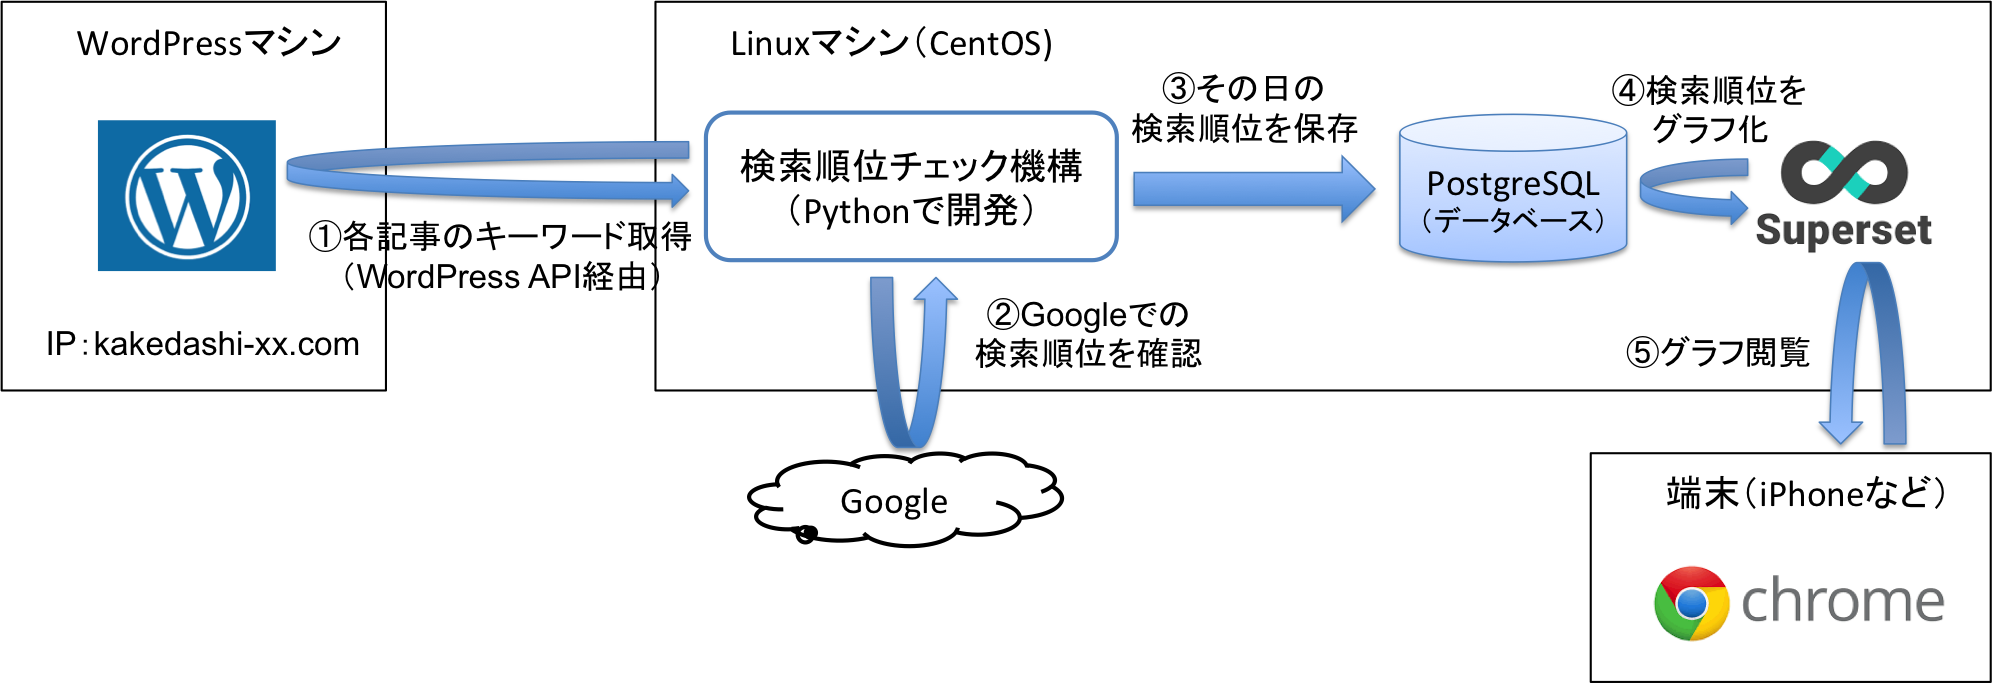 pythonで自作する検索順位チェックツールの構成